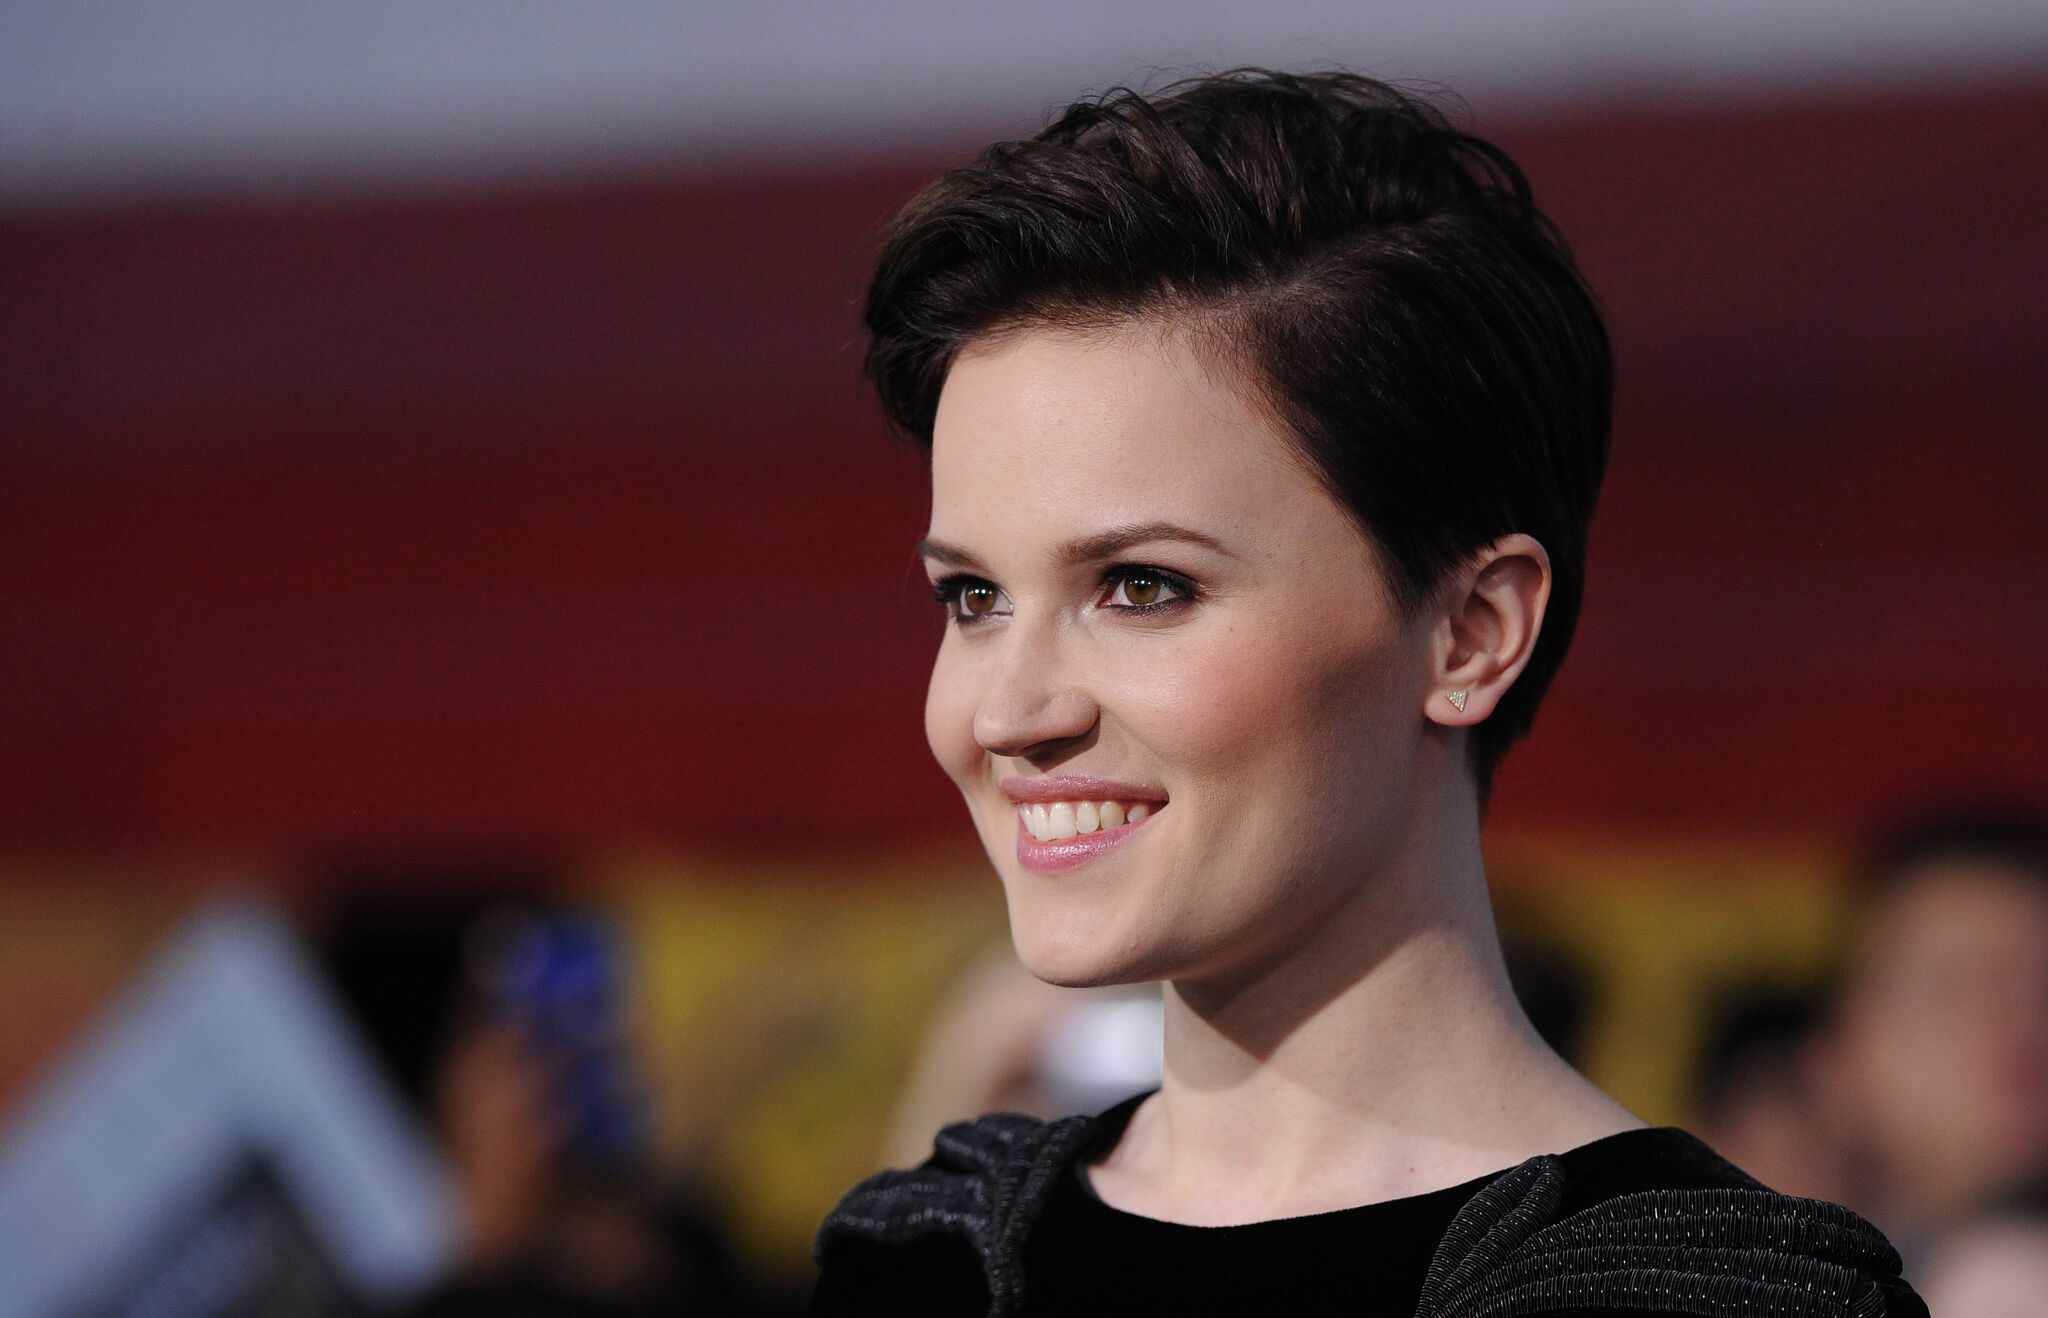 Divergent' author Veronica Roth reveals plans for a 'Chosen Ones' sequel